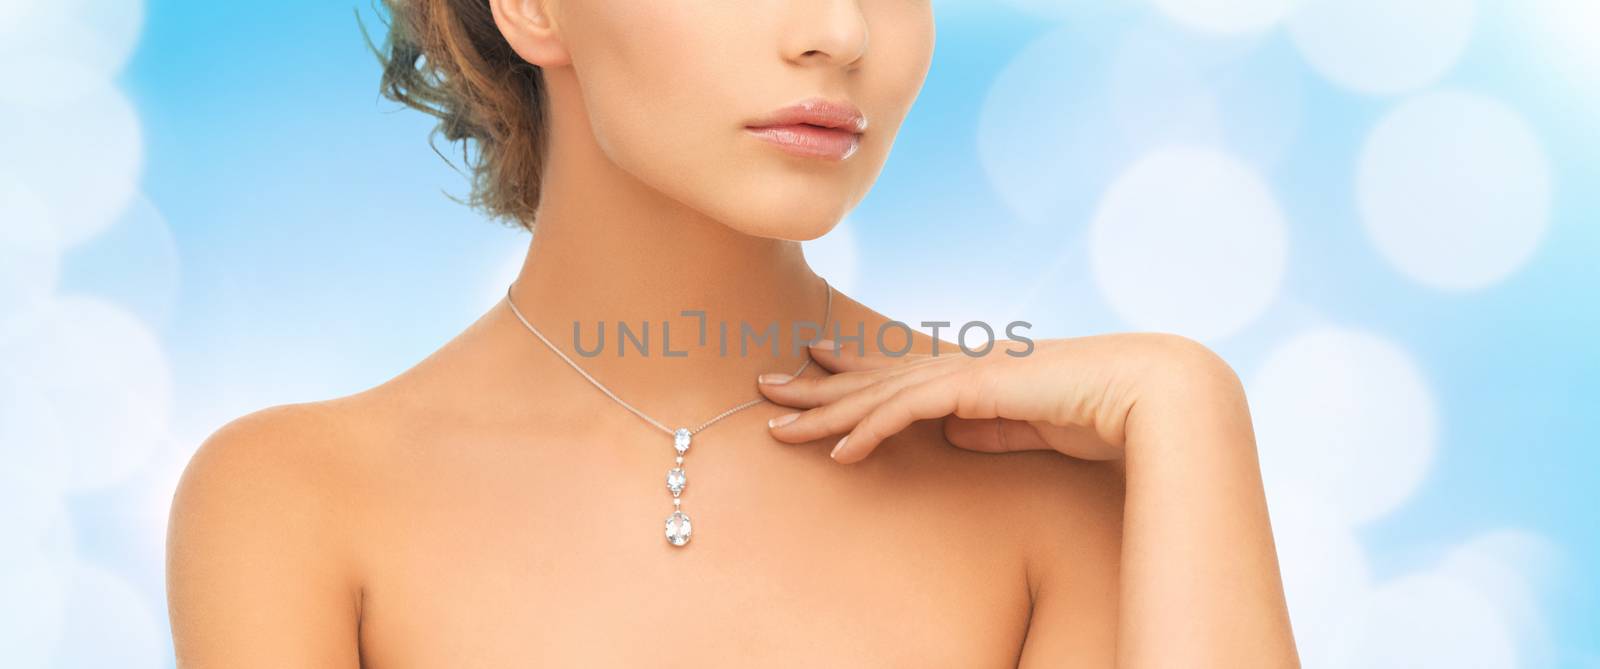 woman wearing shiny diamond pendant by dolgachov